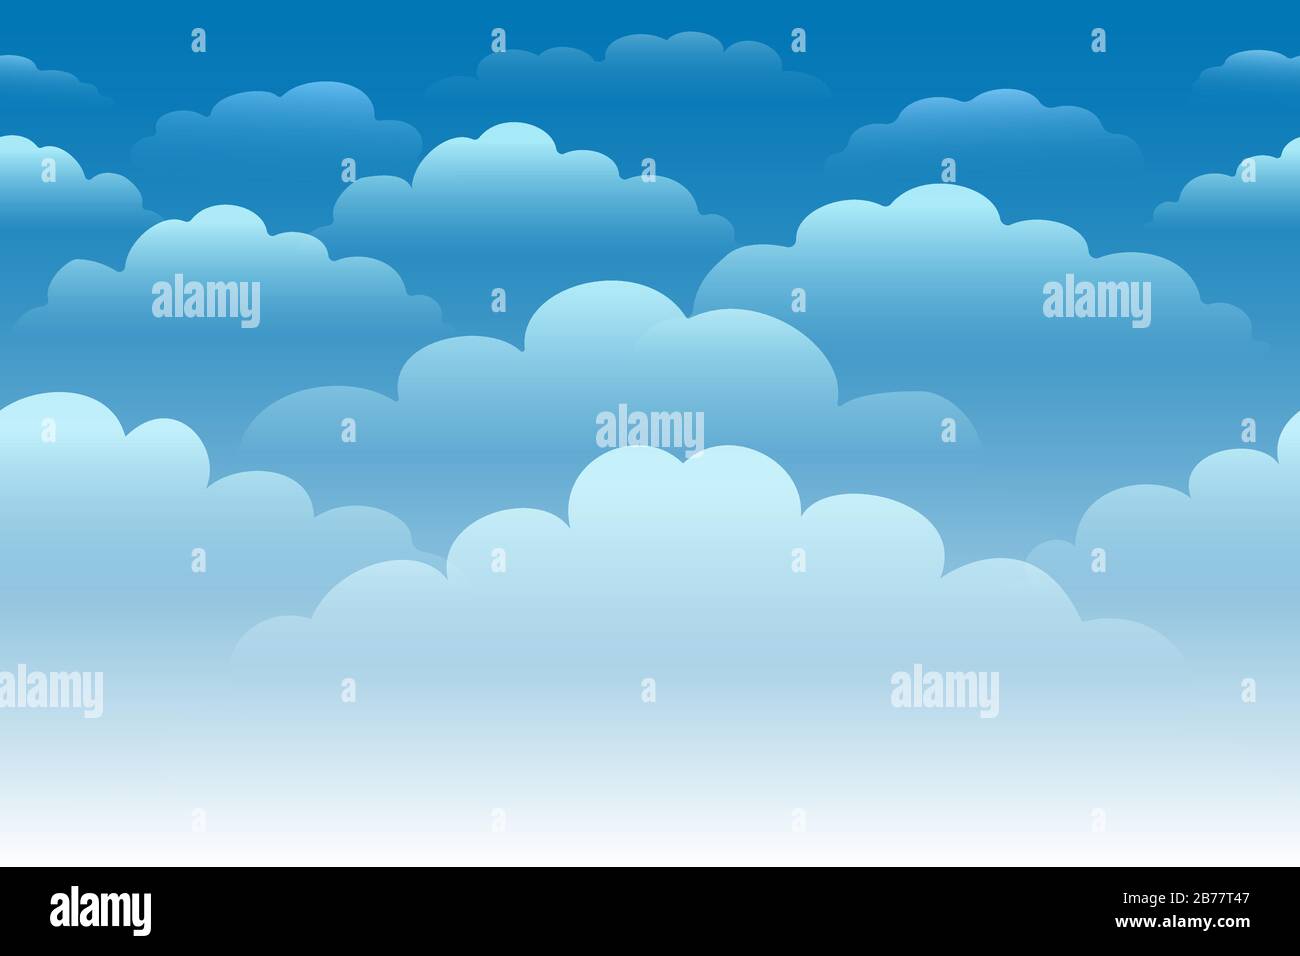 Cartoon blau bewölkt Himmel. Horizontales, nahtloses Muster mit weißen, flauschigen Wolken. Vektorgrafiken. Stock Vektor